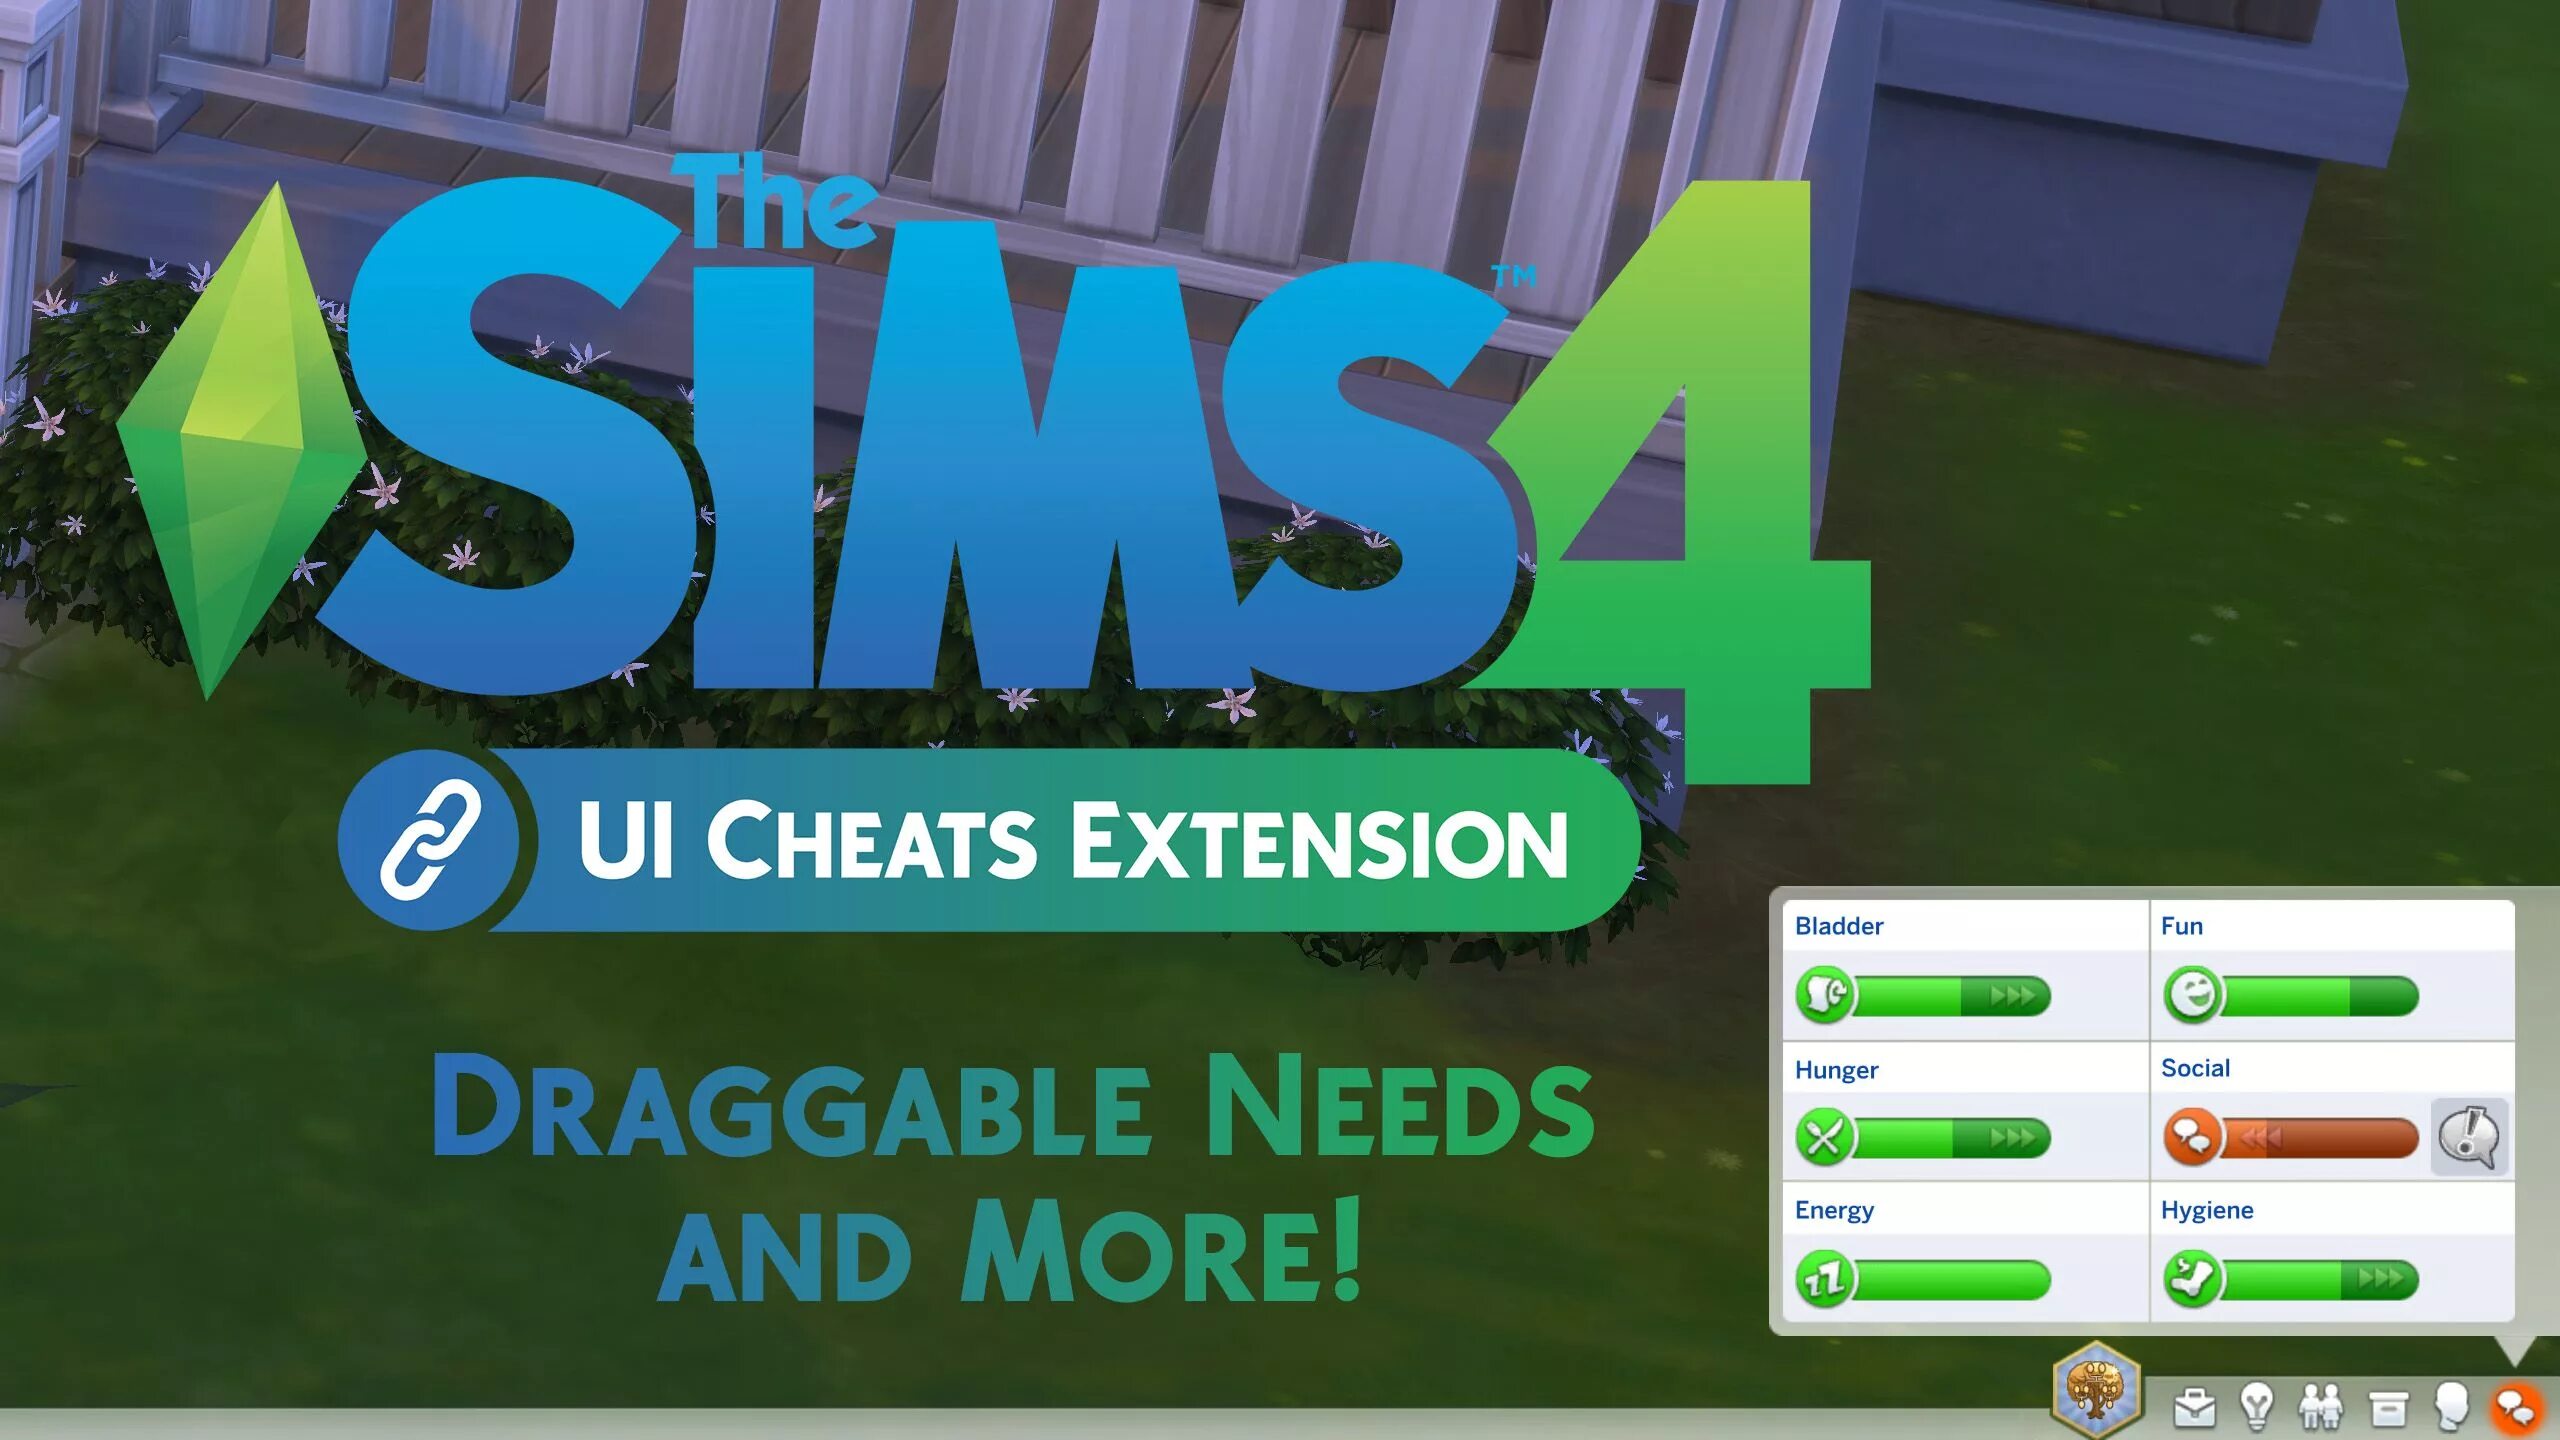 Симс 4 cheat extension. Симс 4 UI_Cheat. UI Cheats Extension SIMS 4 последняя версия. Симс 4 мод UI Cheats Extension. UI Cheats от weerbesu мод симс 4.